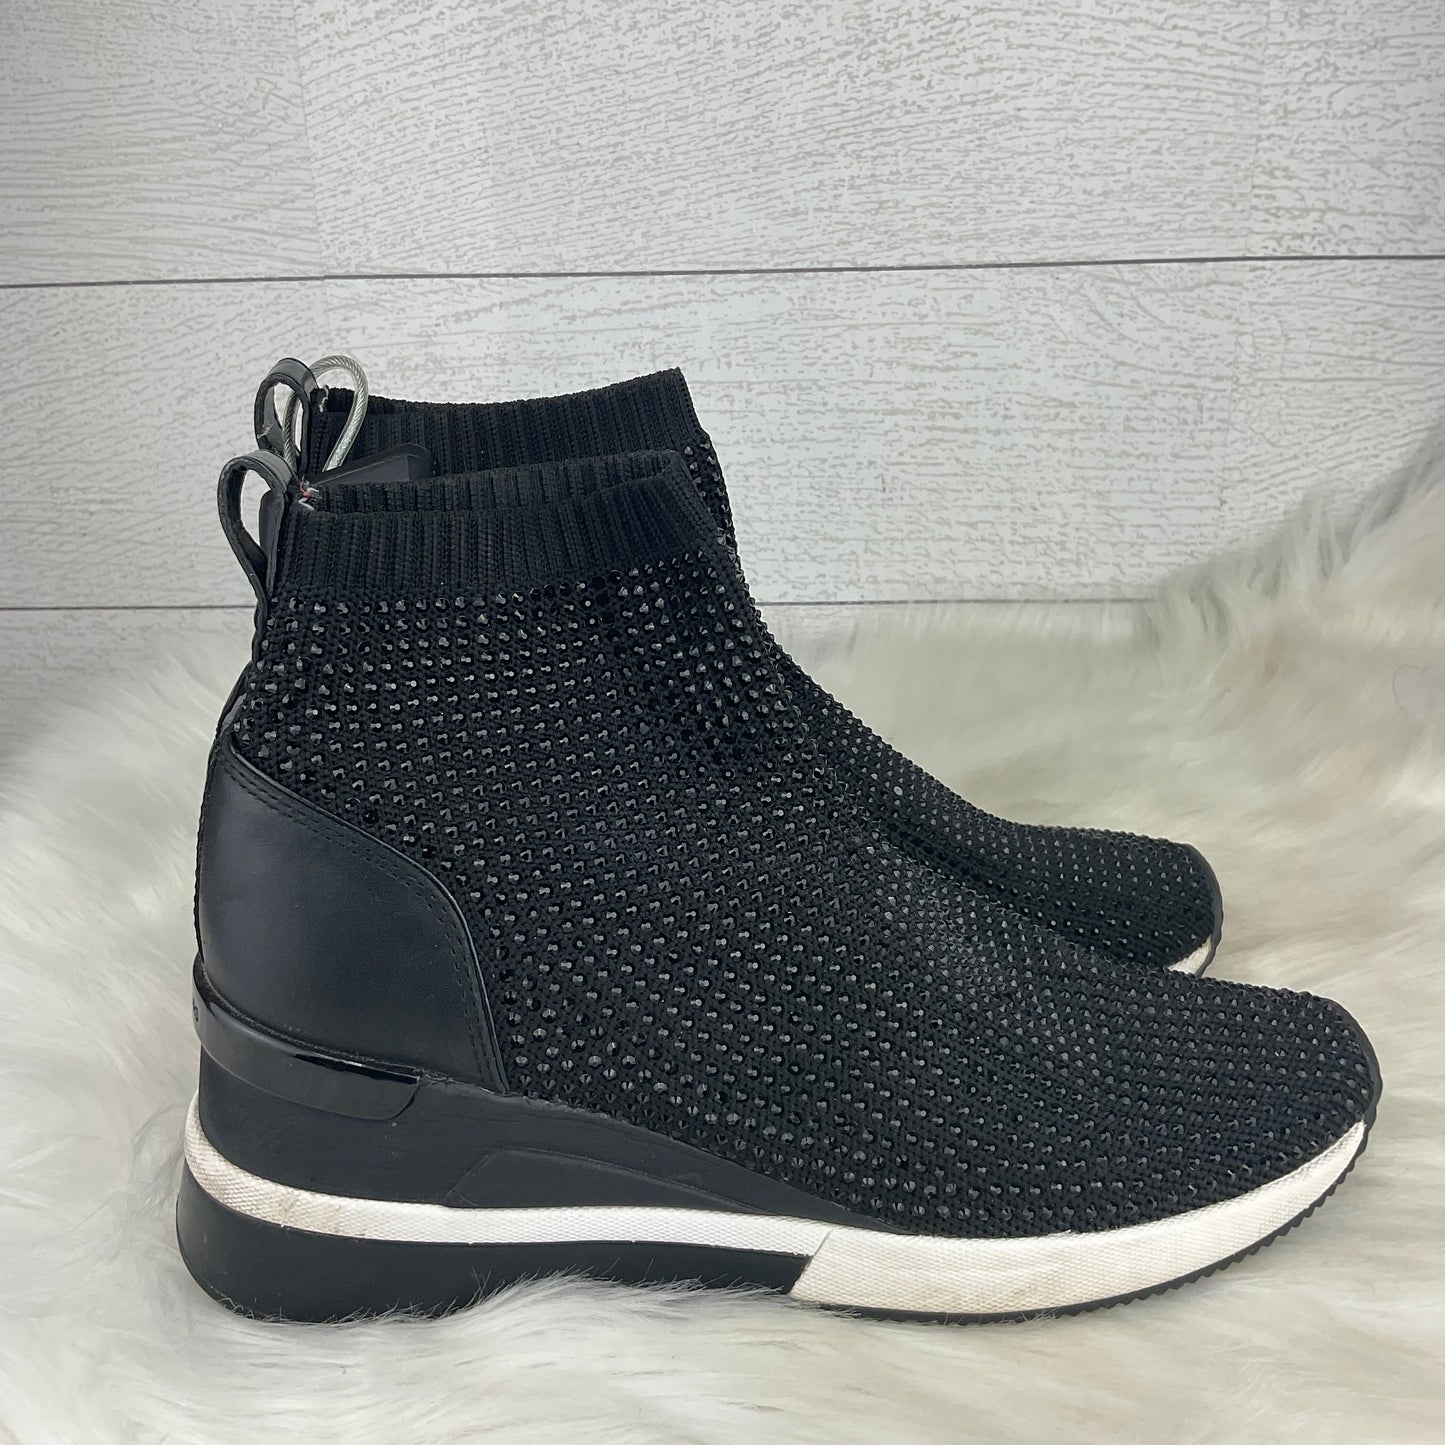 Black Shoes Designer Michael Kors, Size 7